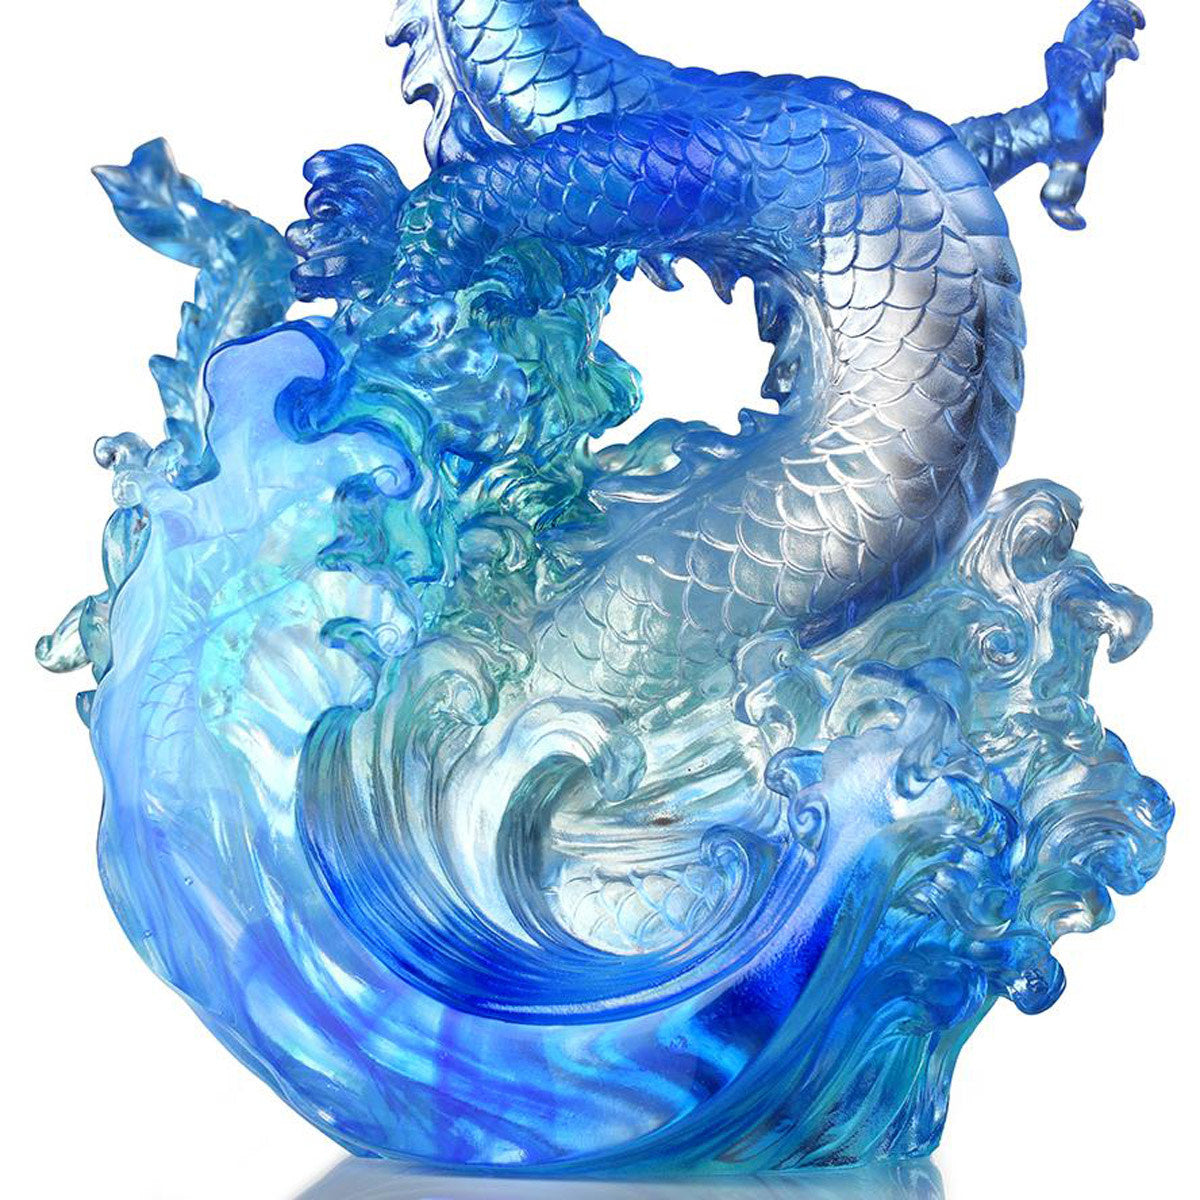 LIULI Crystal Art Crystal Dragon, Ocean Wave, Dagon of Excellence in Sapphire Blue